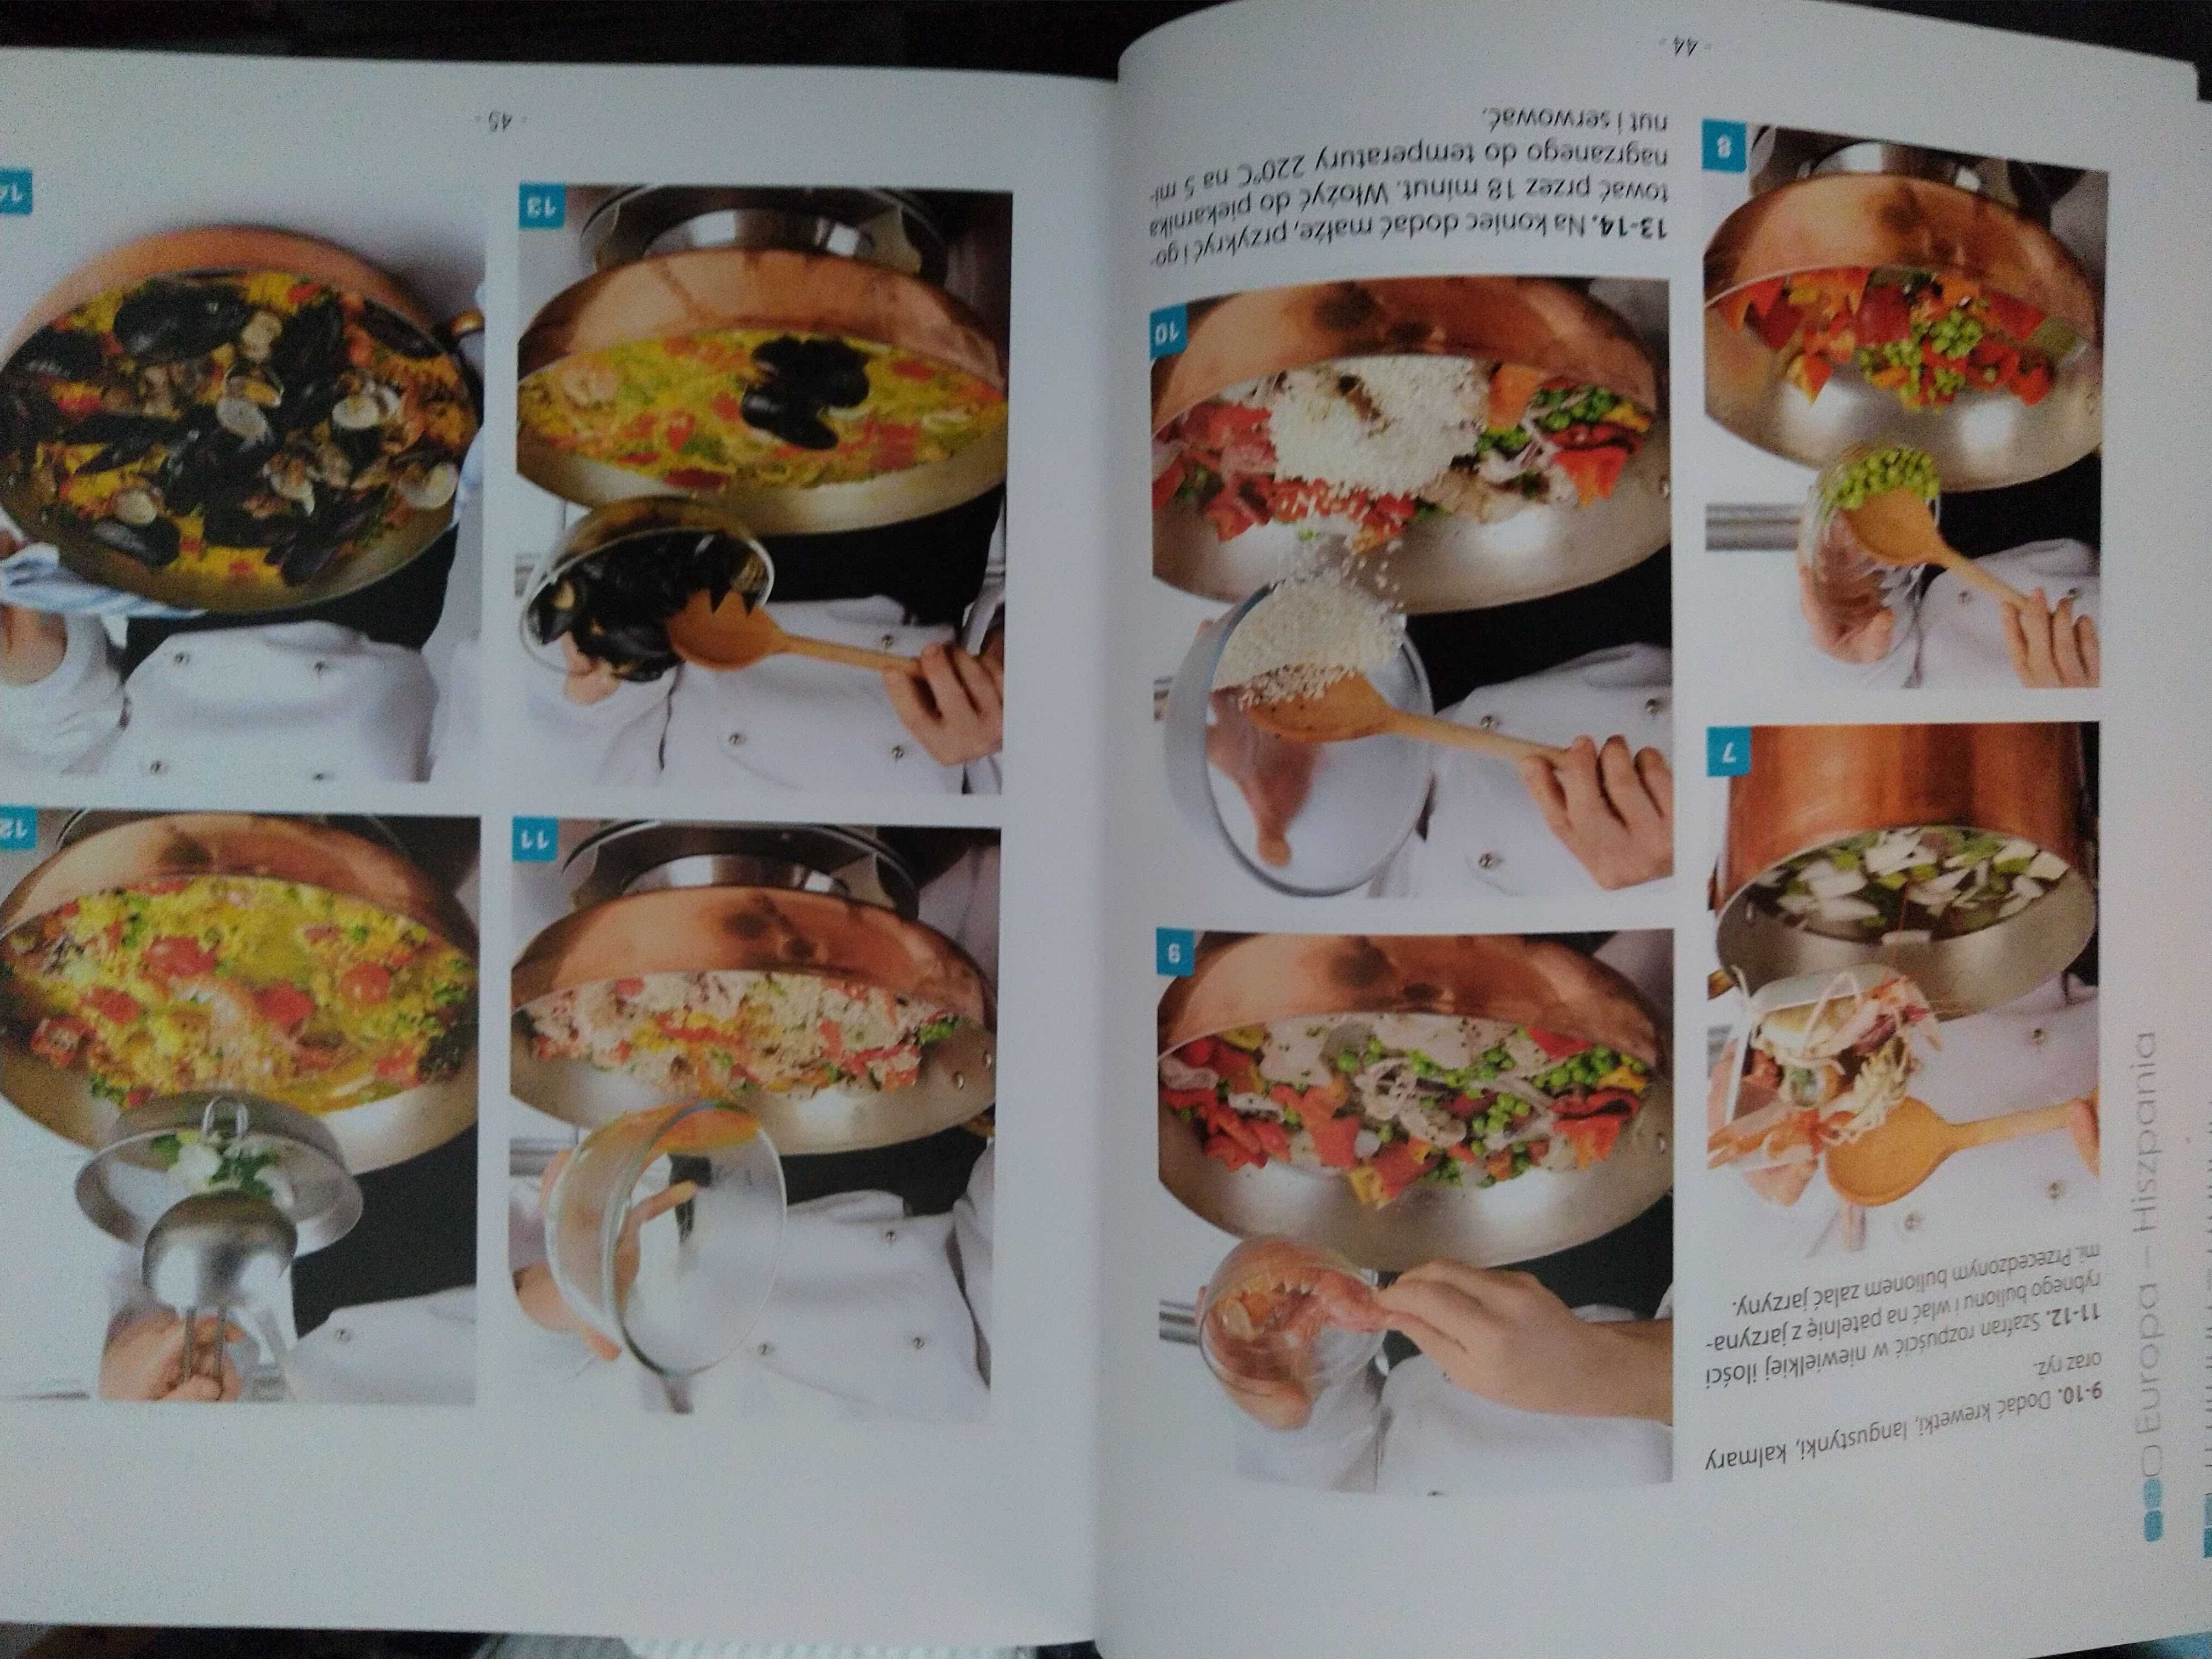 SUSHI, Sashimi oraz Sushi, paella i guacamole przepisy